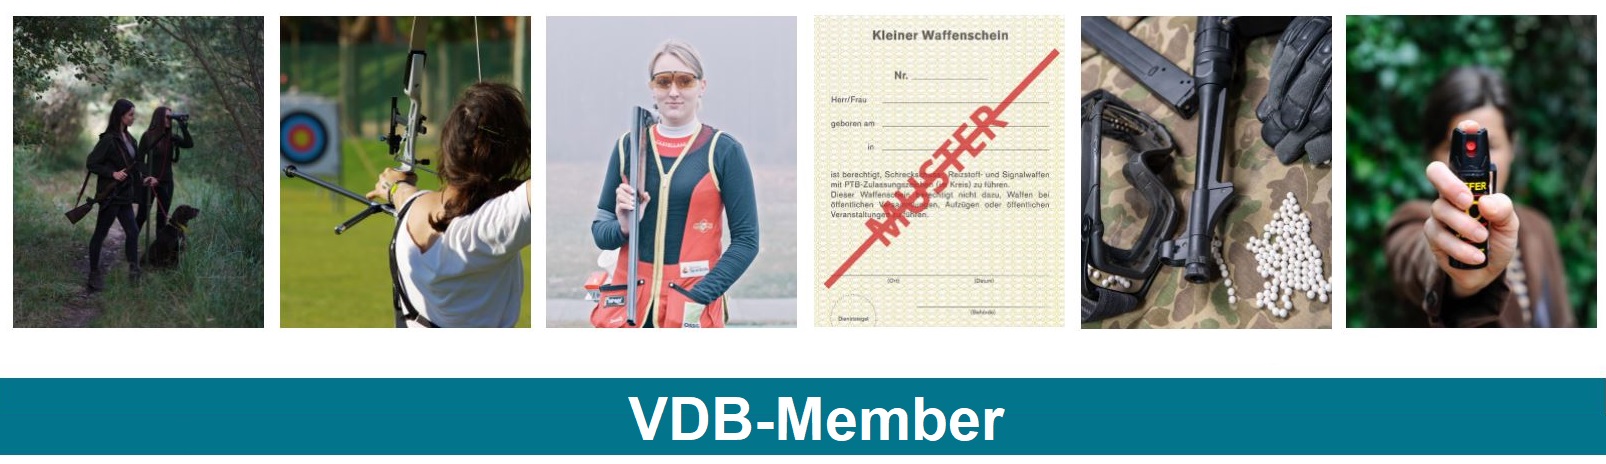 VDB-Member